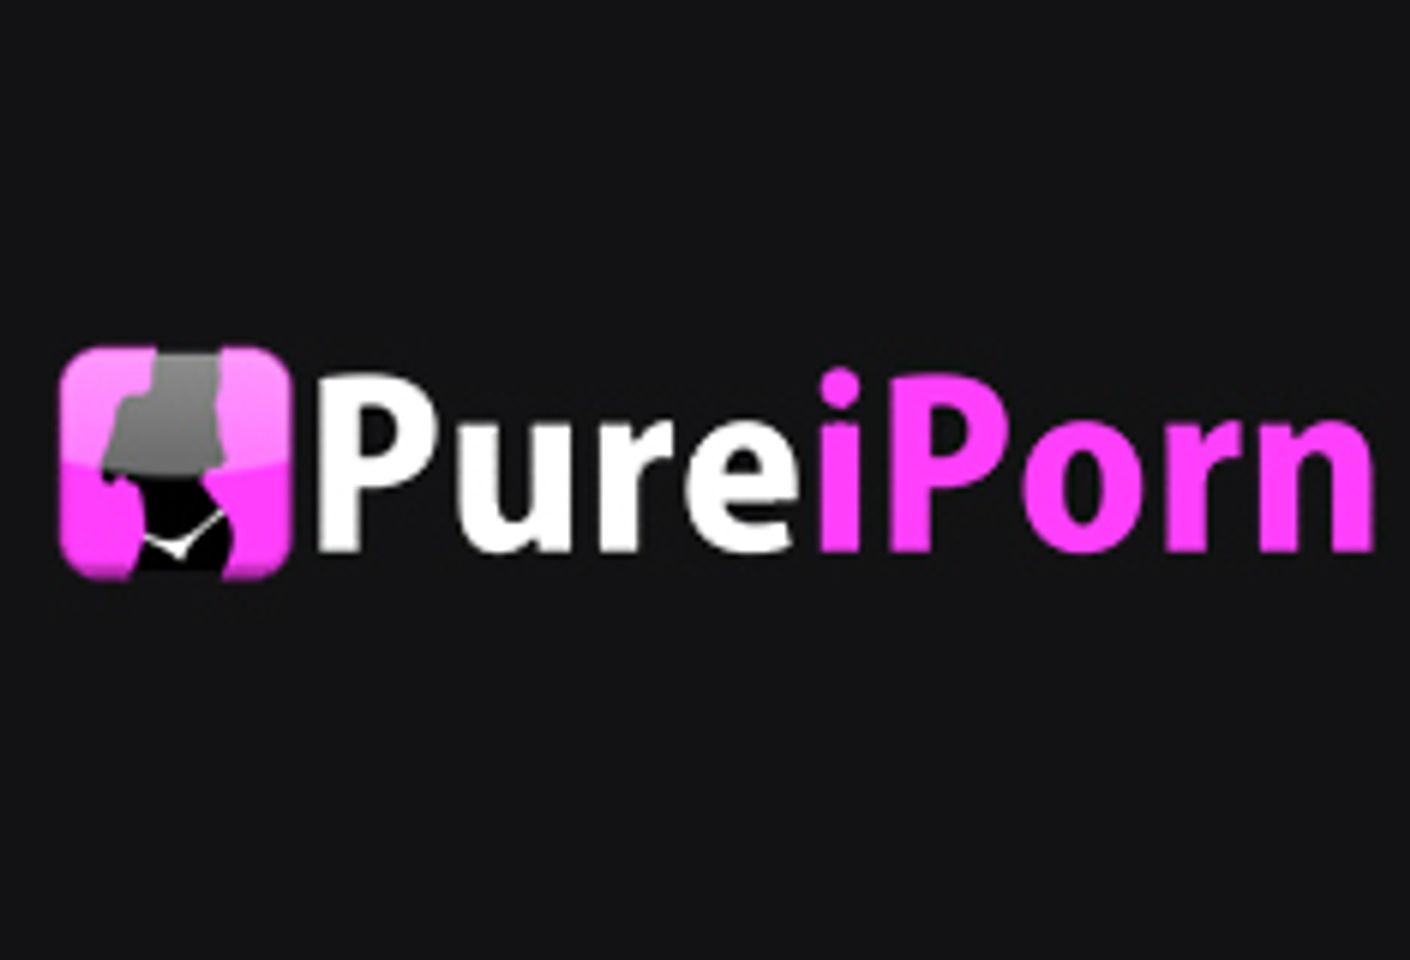 PureiPorn, Club Media Partner in New iPhone Service